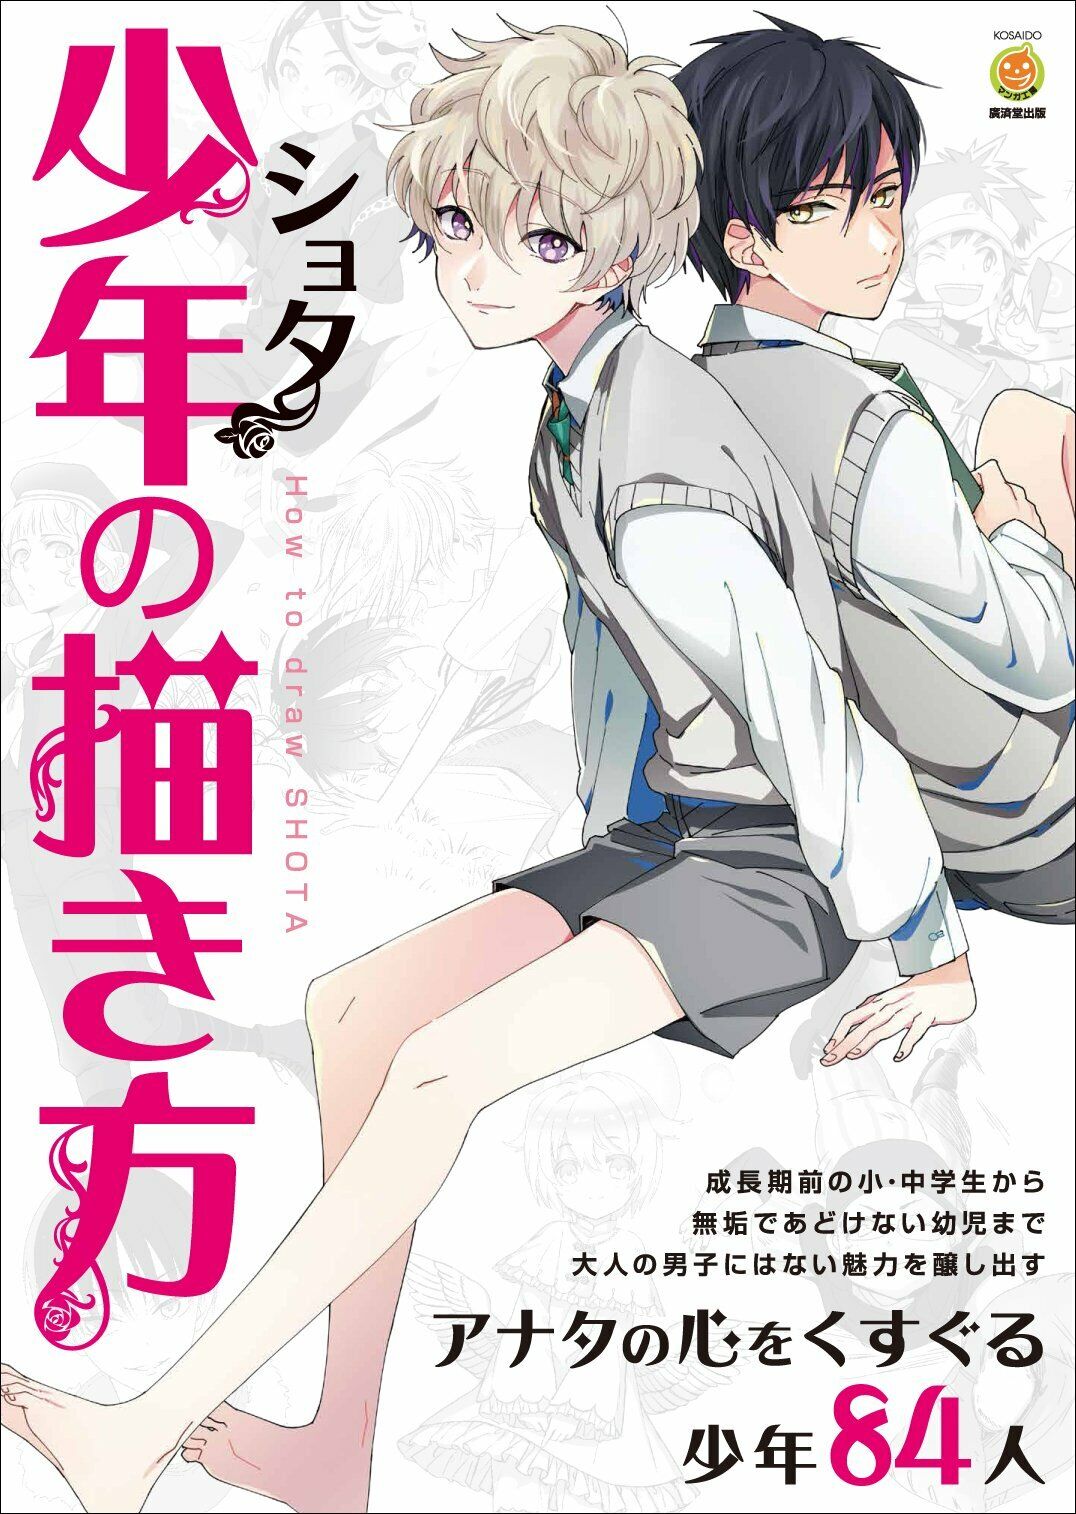 How to Draw SHOTA Boy Young Male Character Anime Manga BL Japanese Book |  eBay